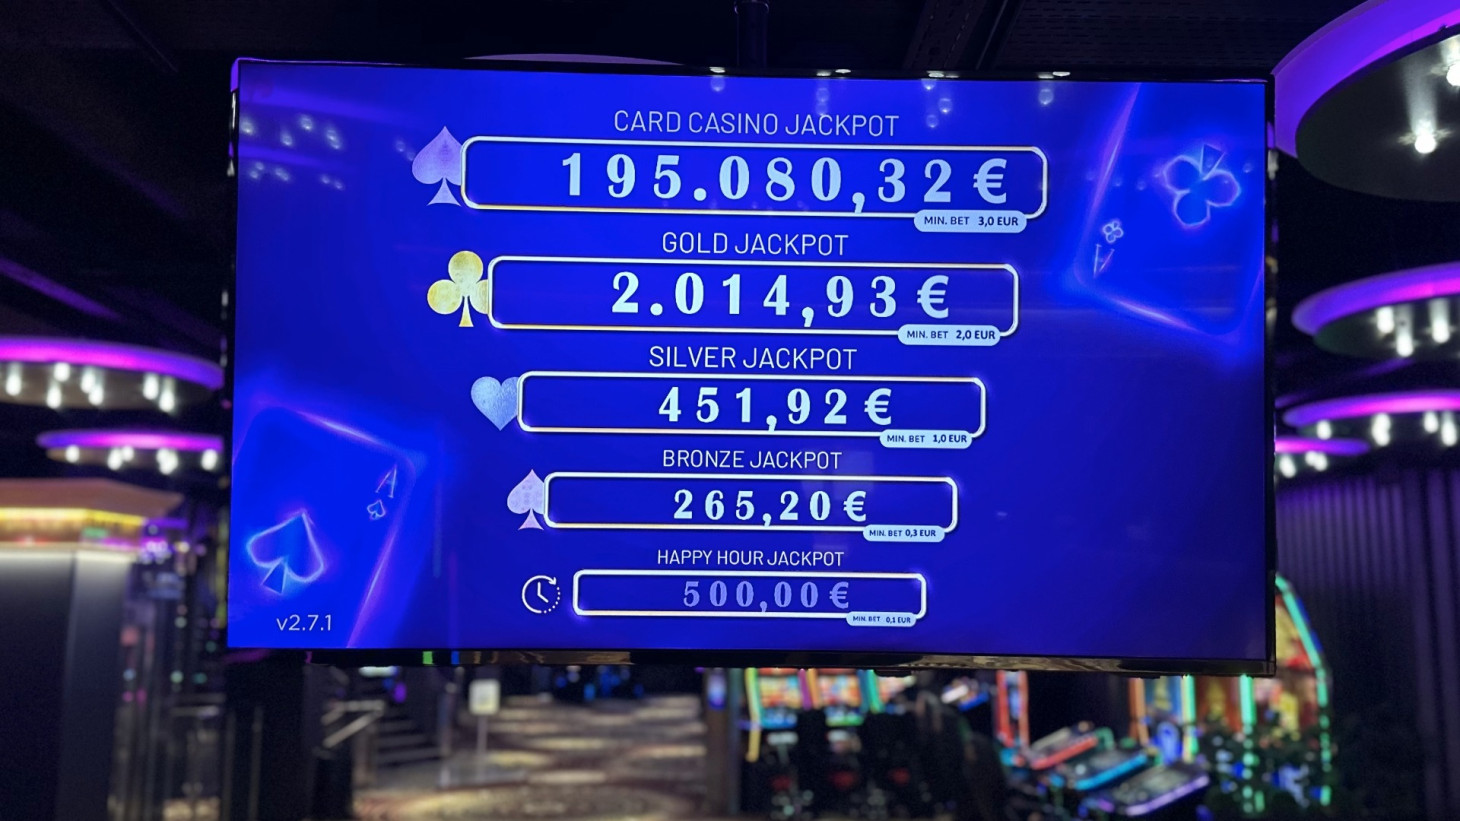 The biggest jackpot in Slovakia is heading towards the €200,000 mark!